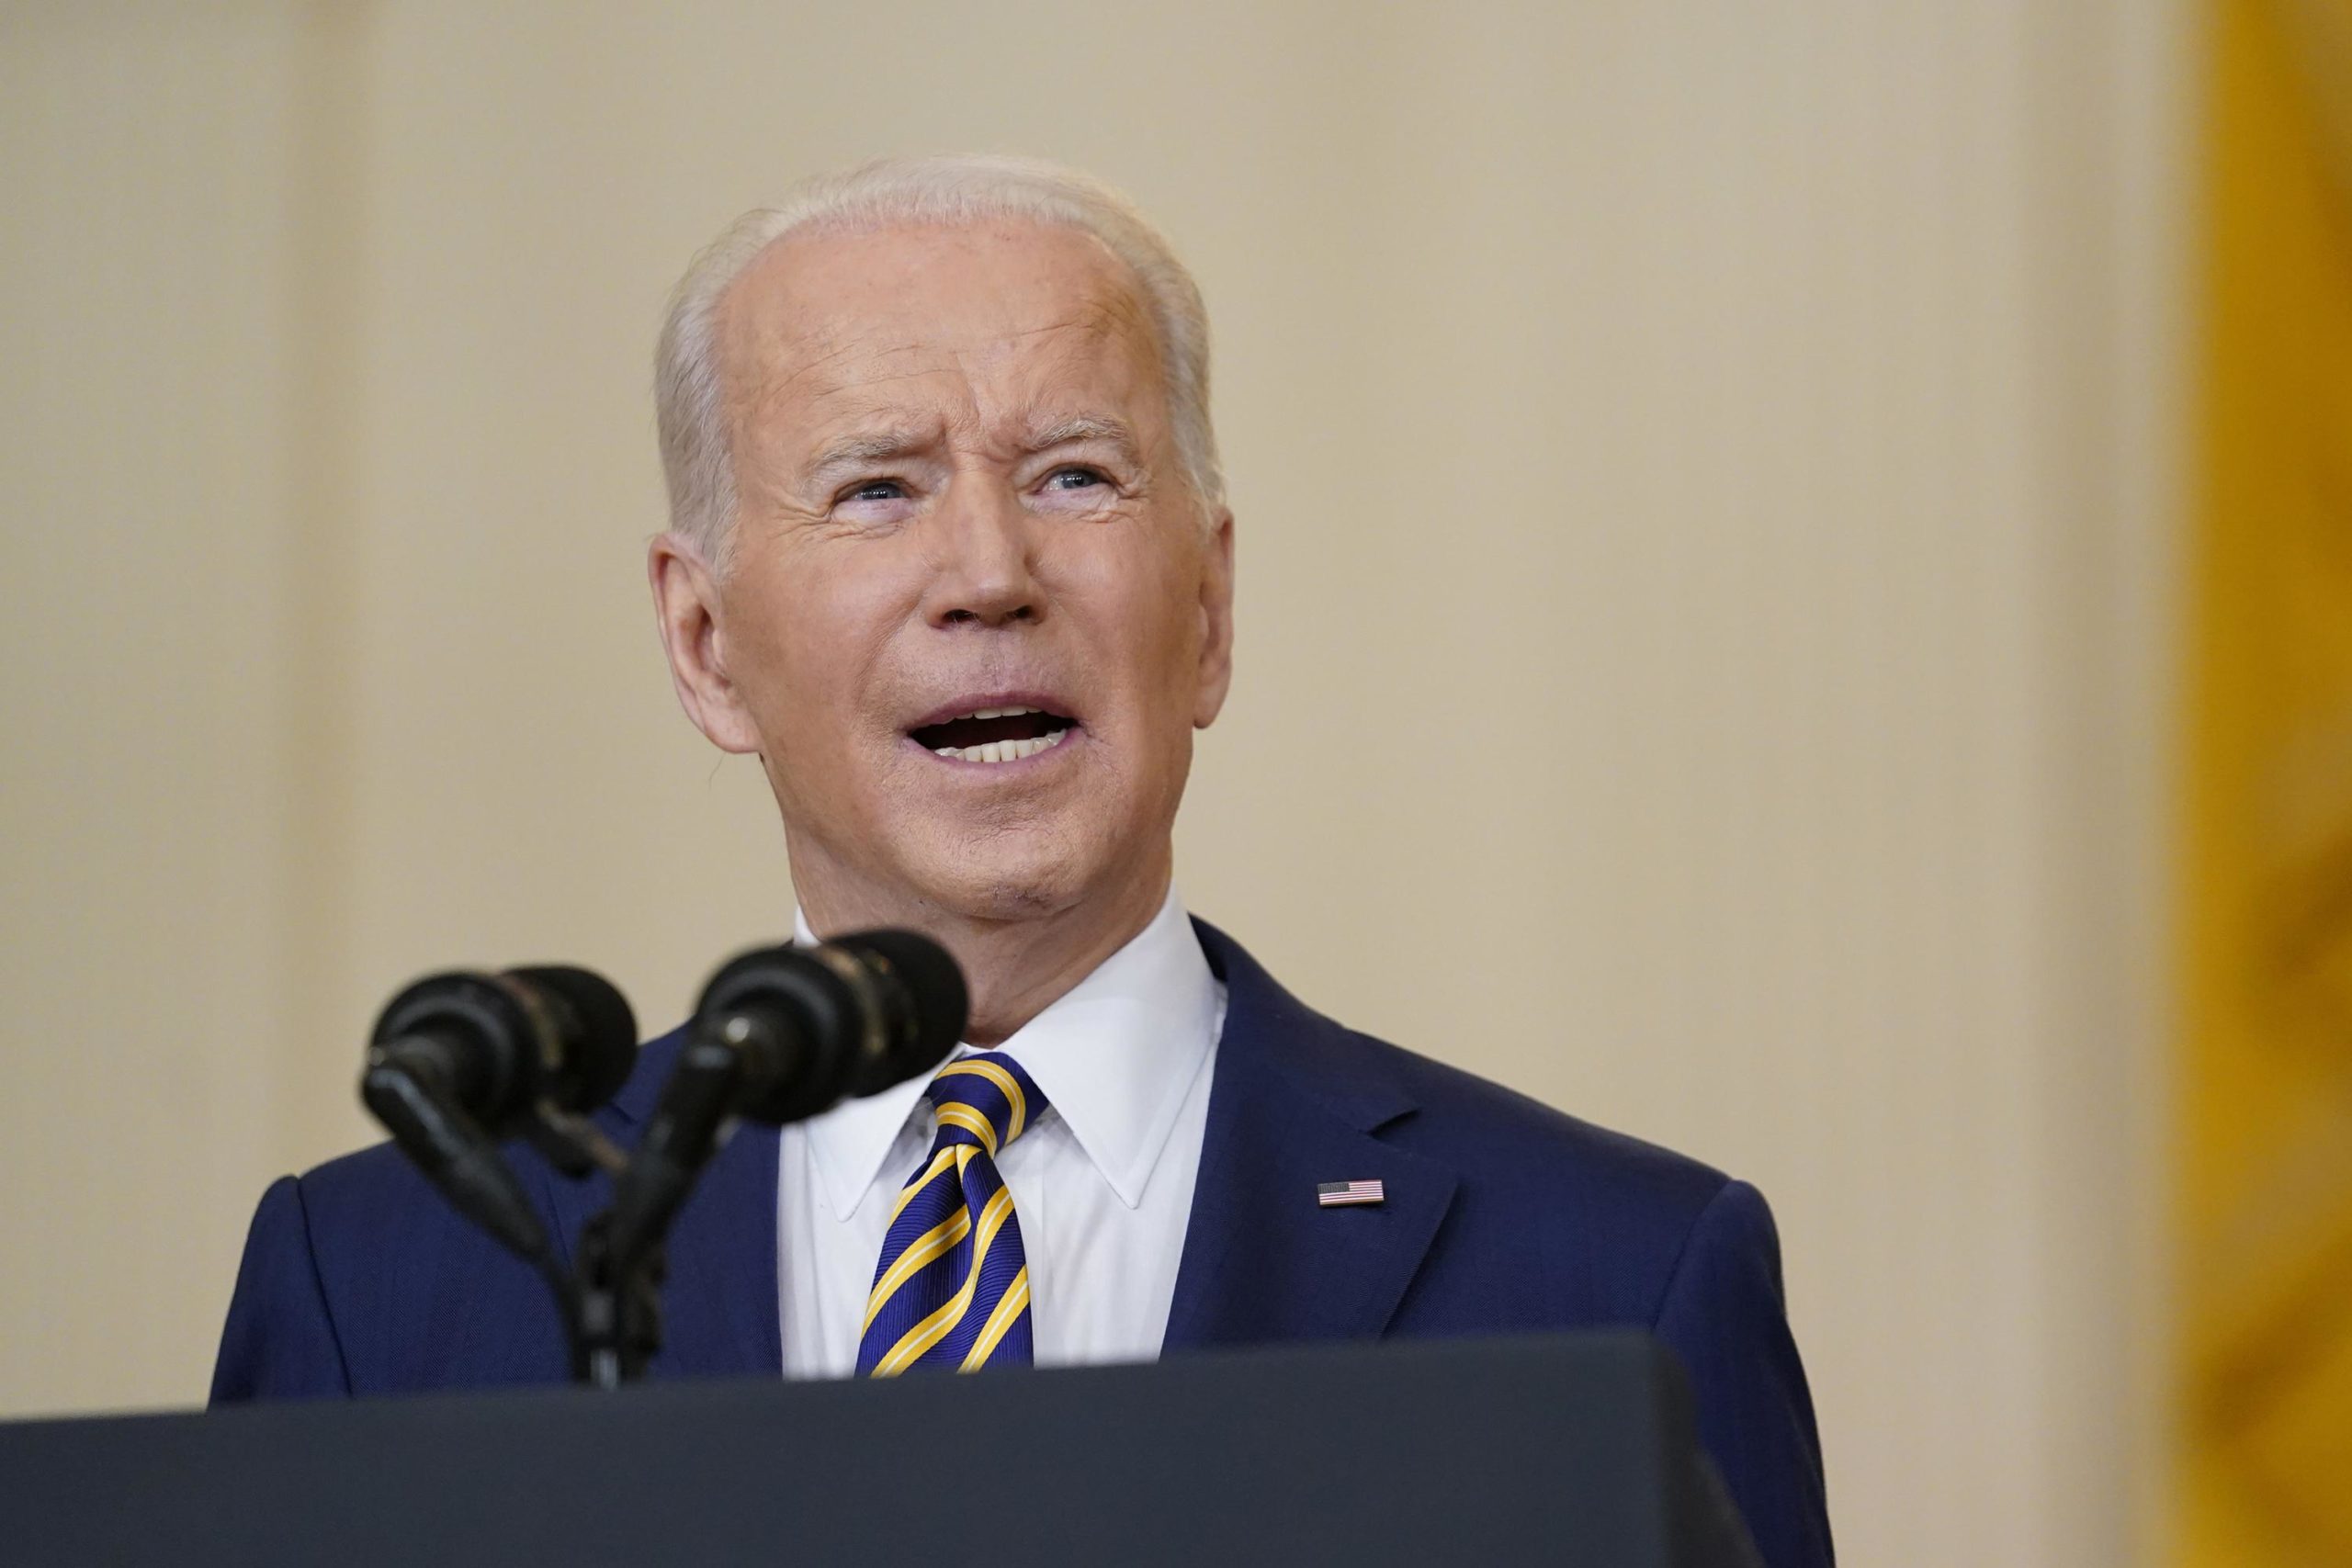 Biden mistakenly says Iranians instead of Ukrainians in State of the Union speech